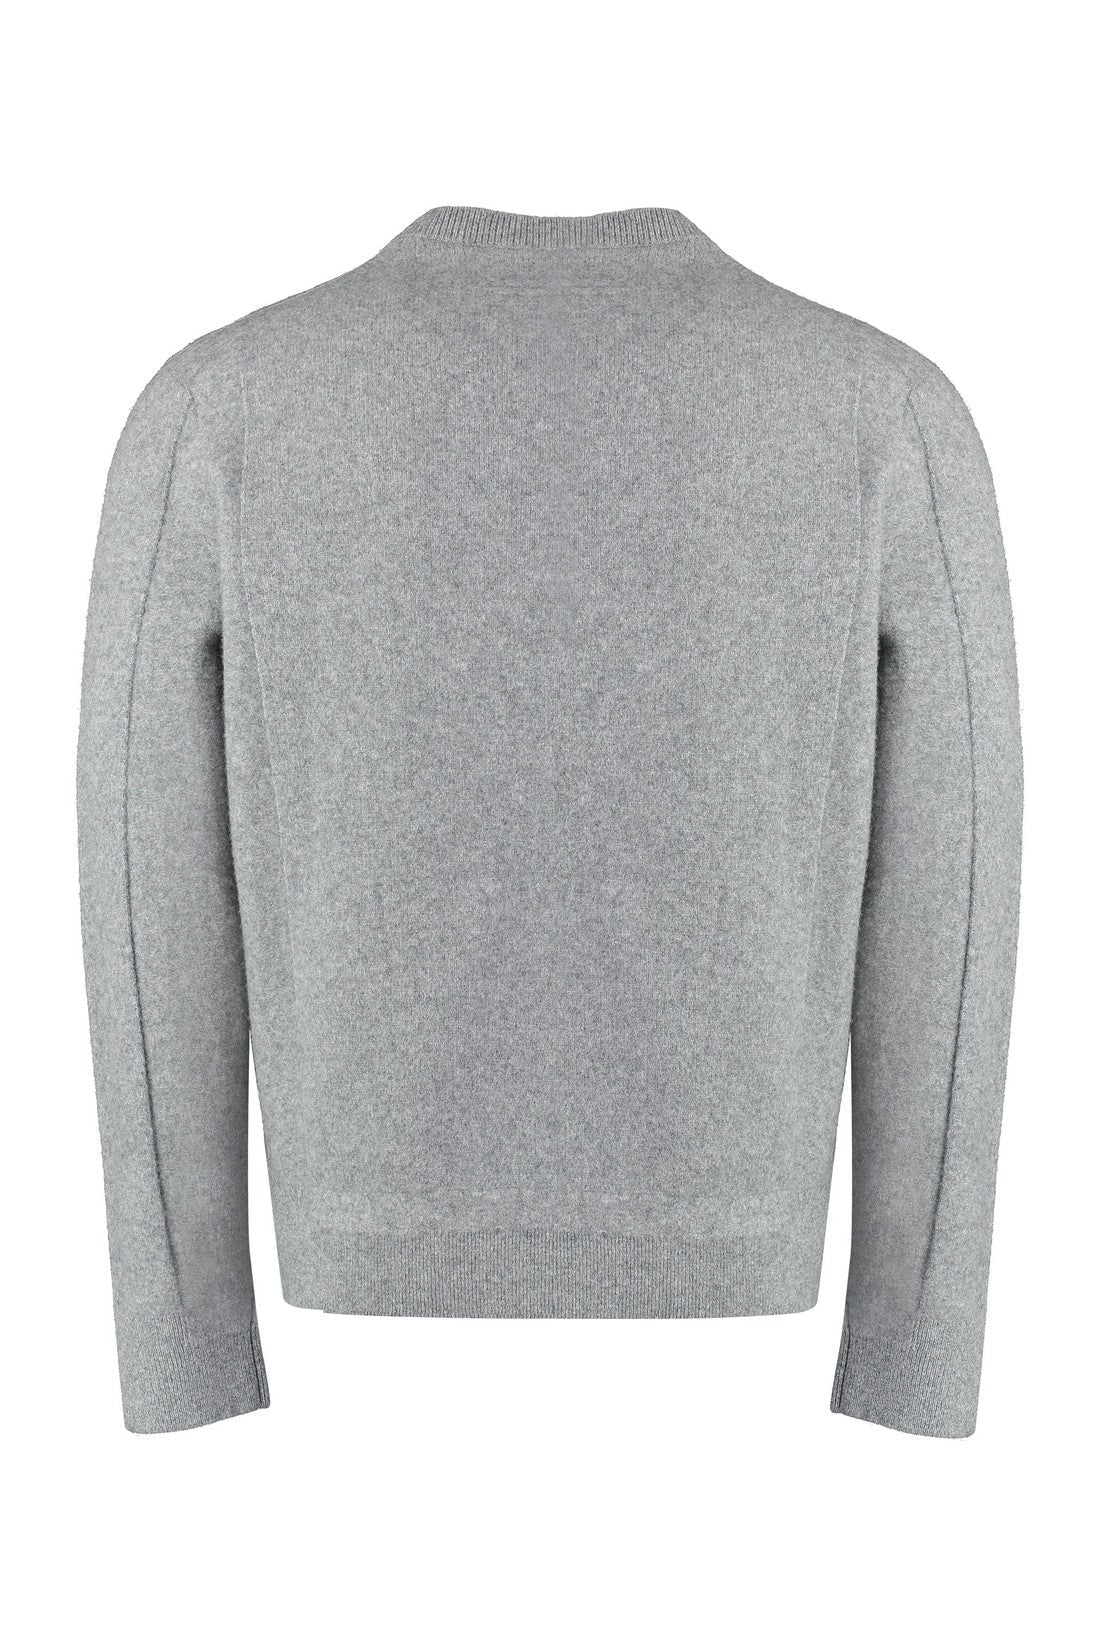 Zegna-OUTLET-SALE-Wool-blend crew-neck sweater-ARCHIVIST